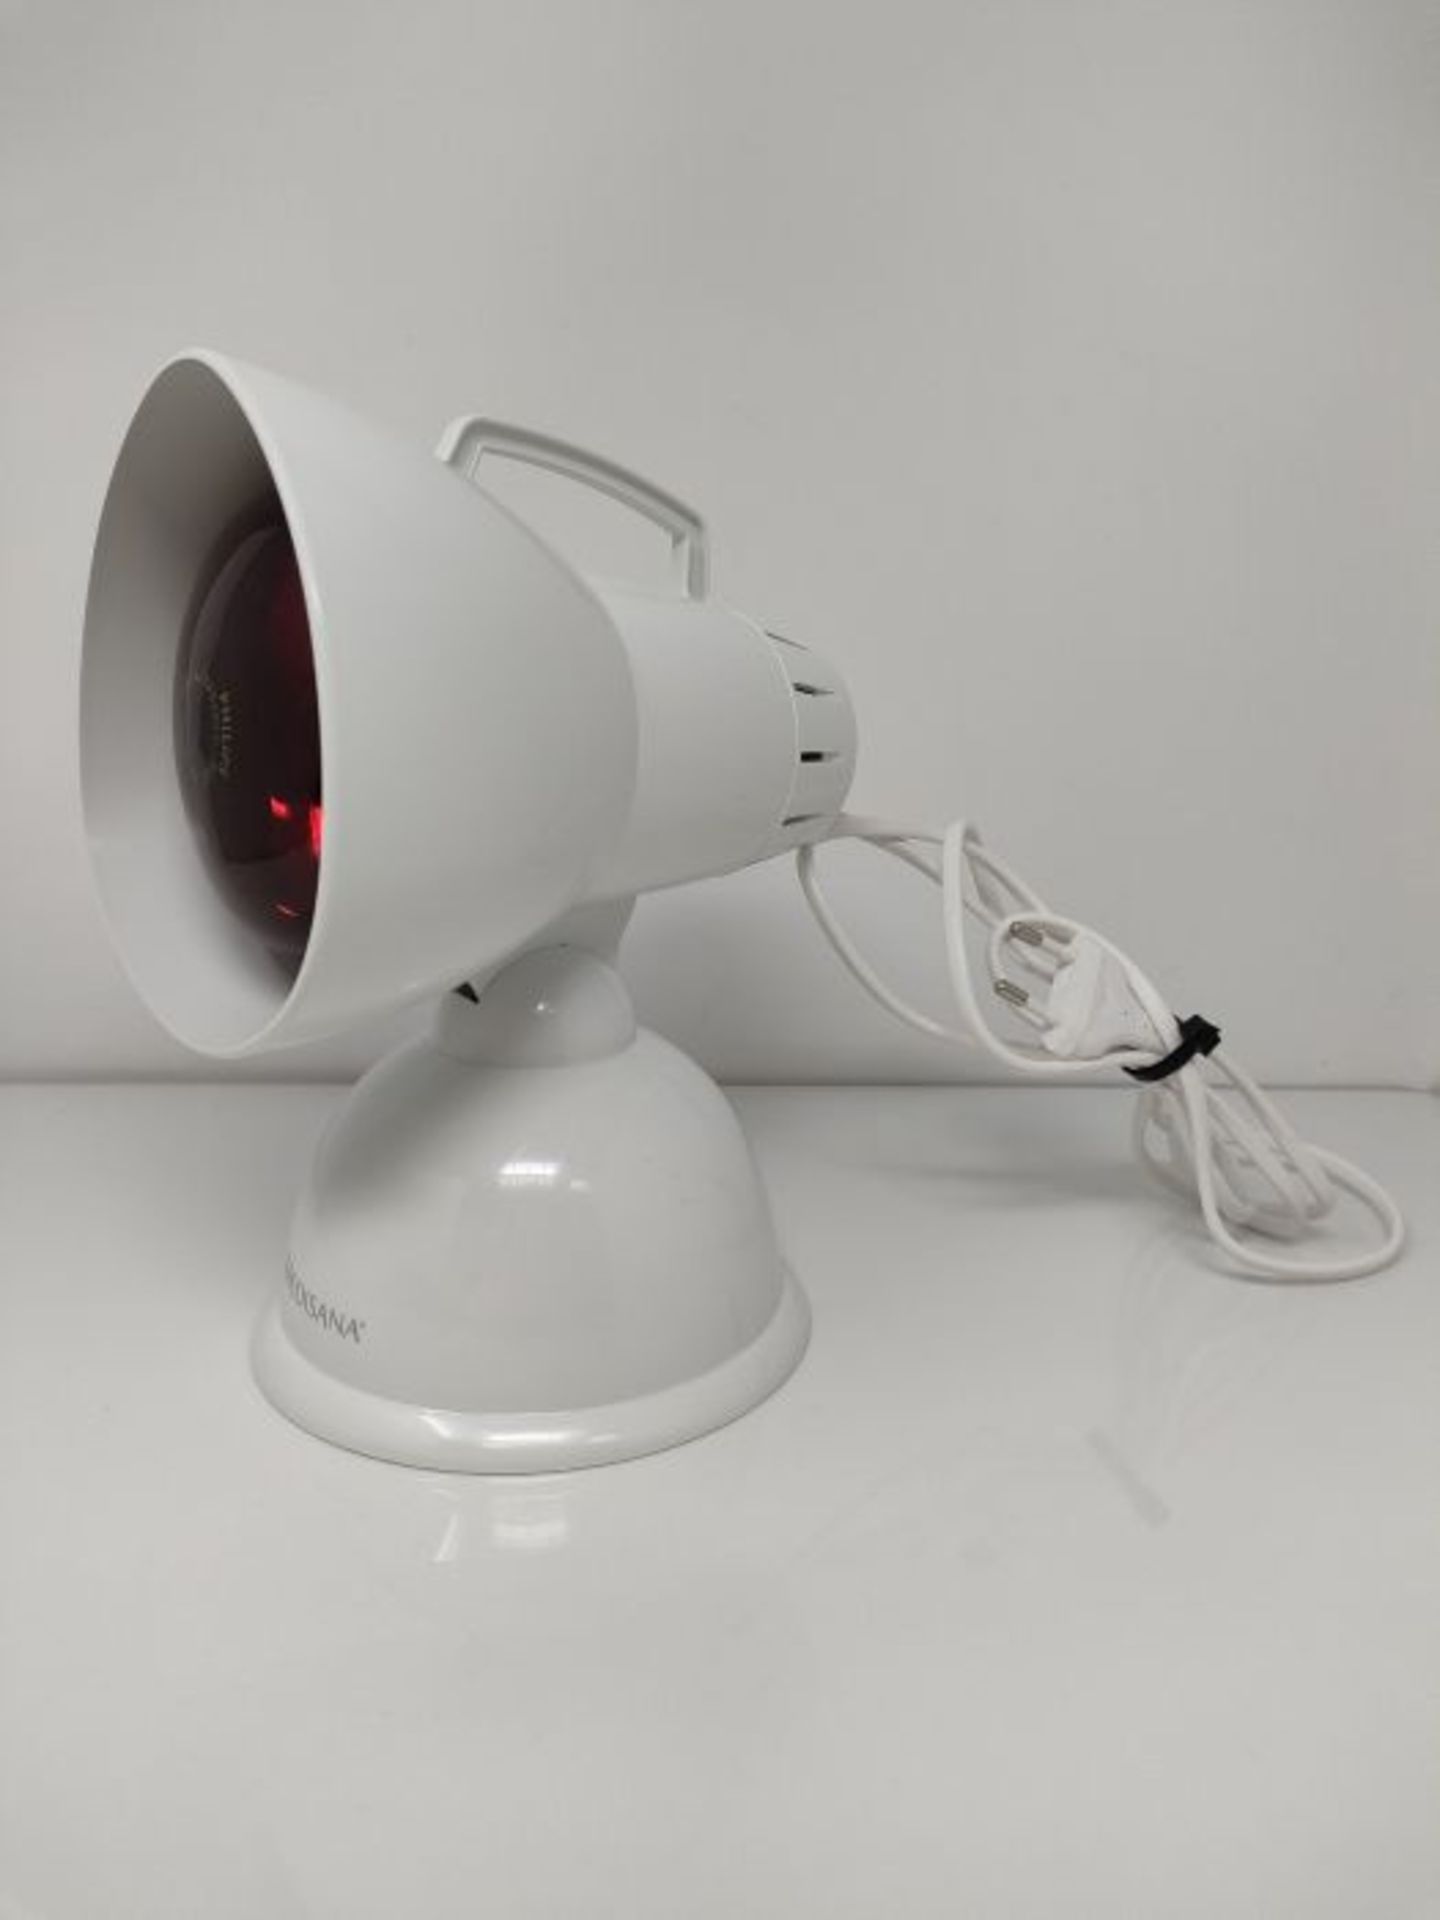 Medisana IR100 Electric Infrared Heat Lamp 100 Watts 88232 - Image 2 of 2